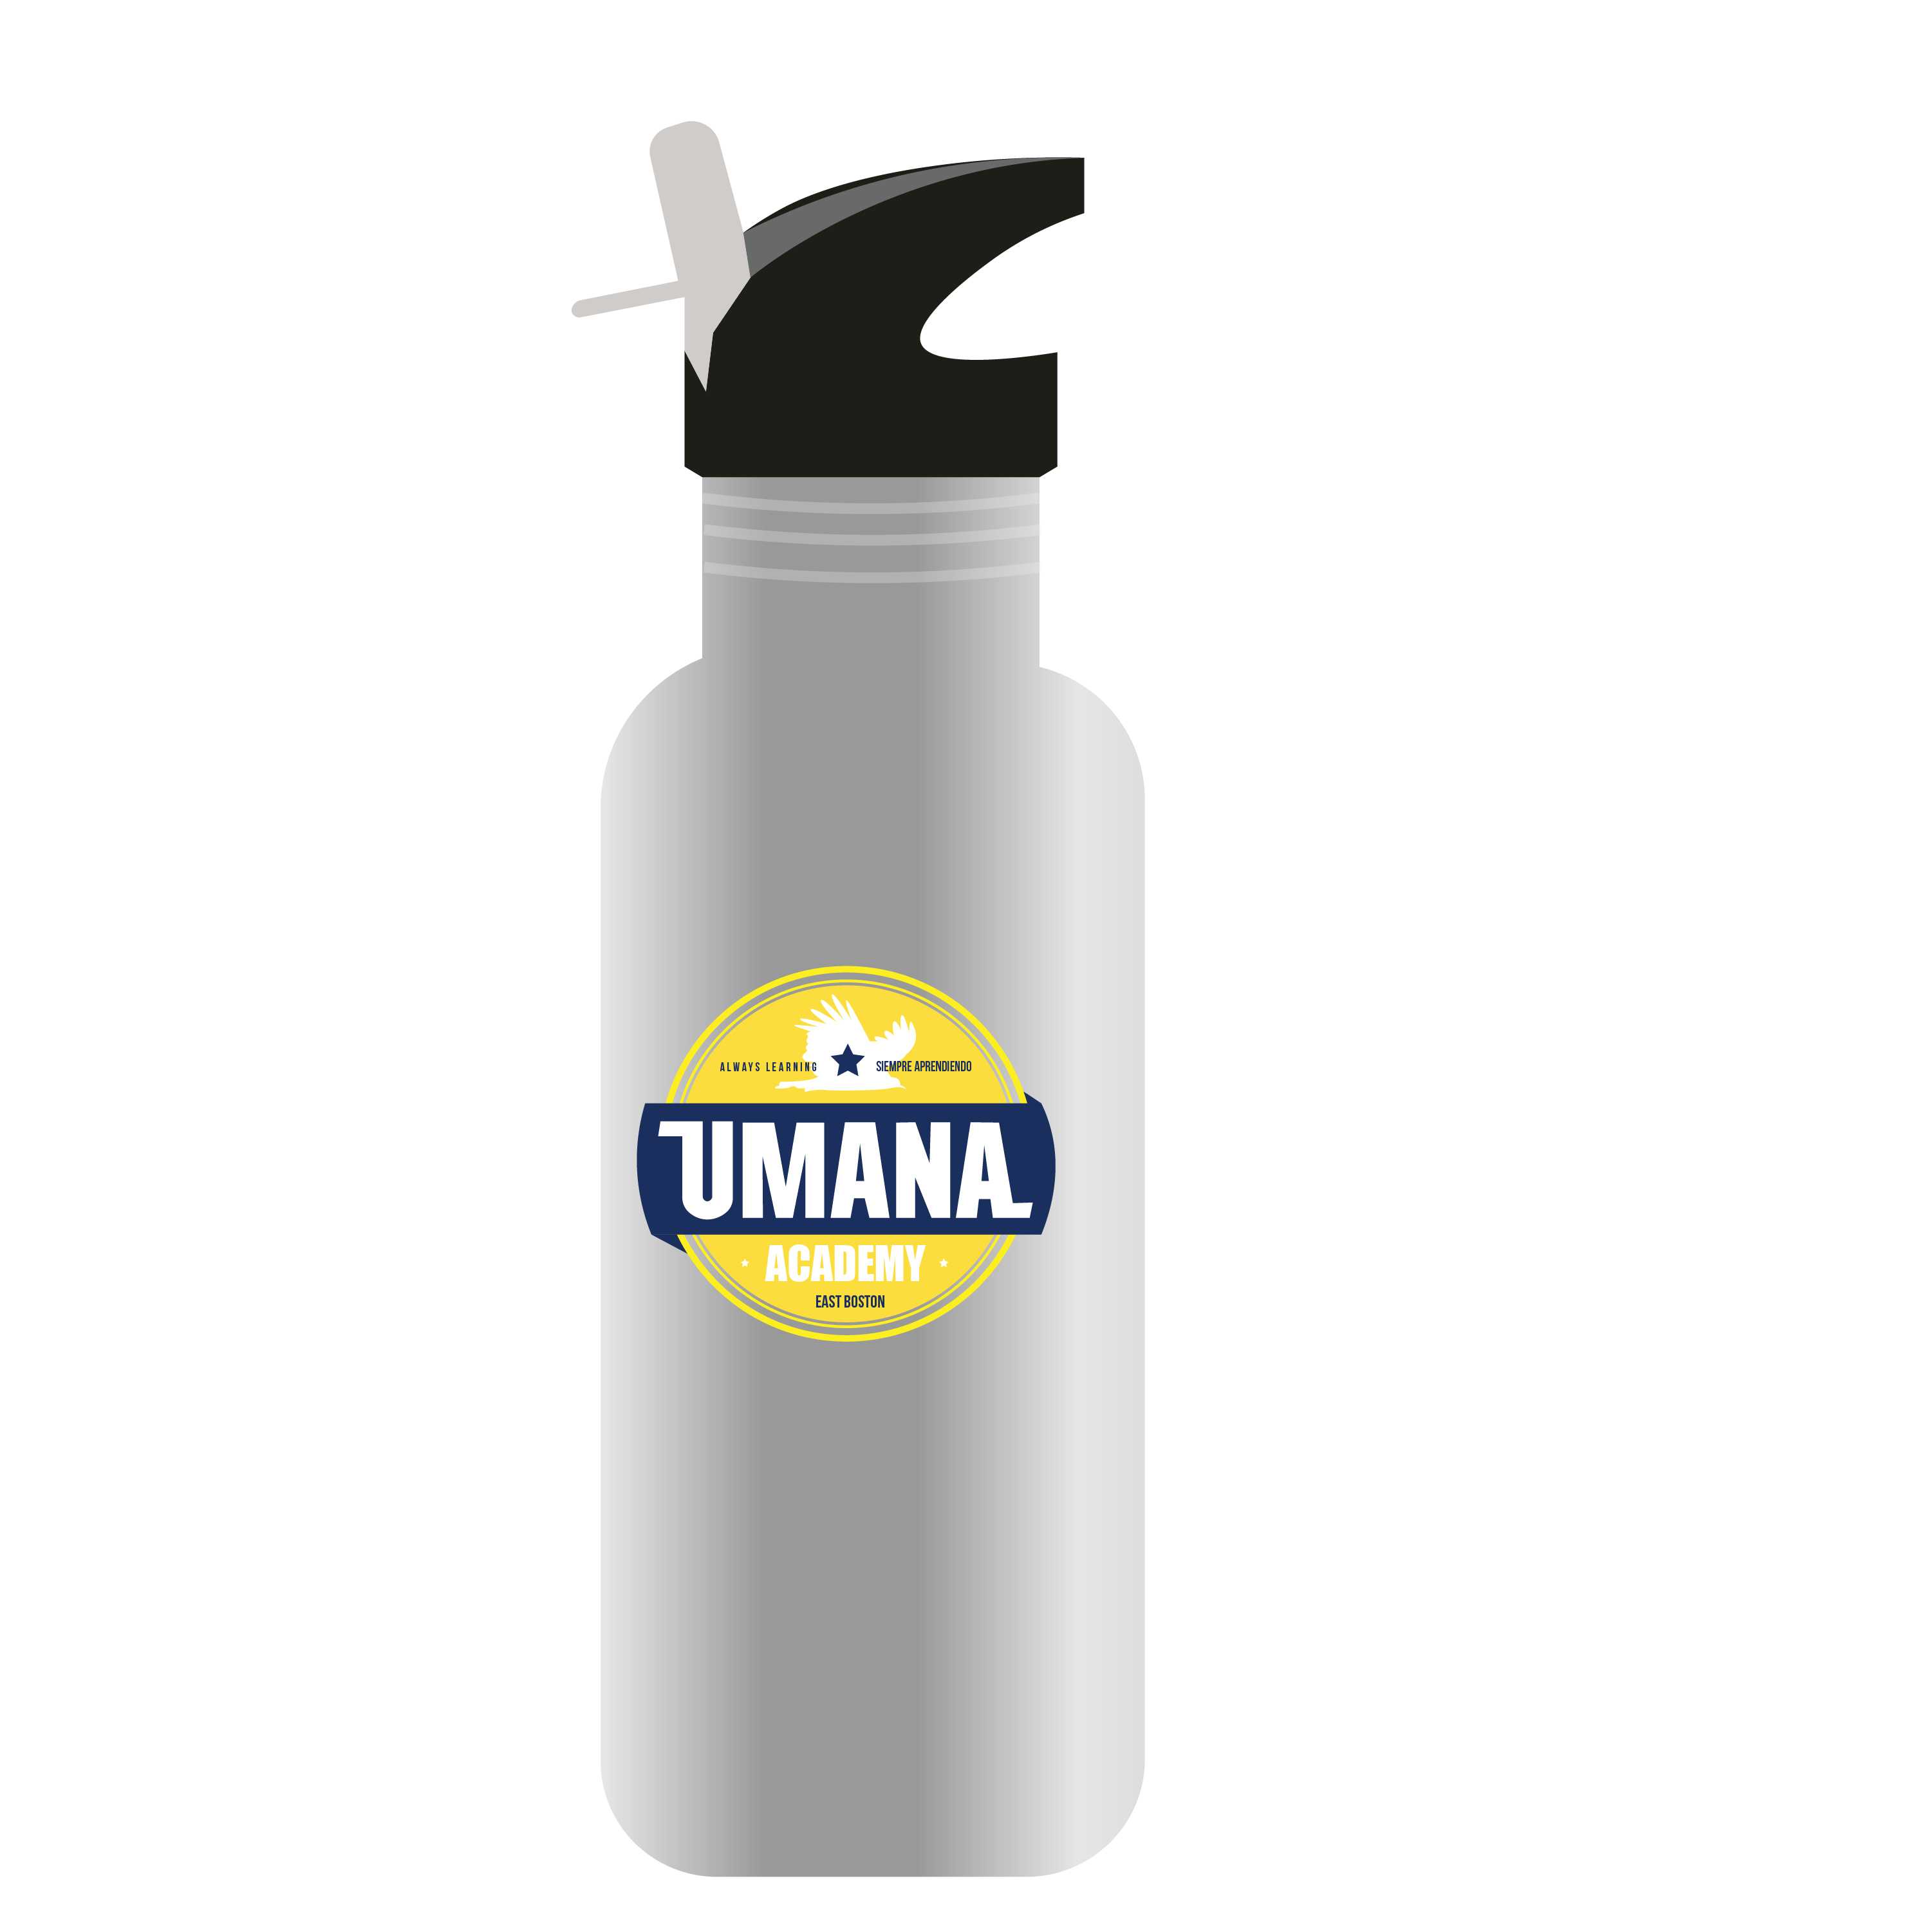 Mario Umana Academy STAINLESS STEEL WATER BOTTLE STEM/STRAW TOP